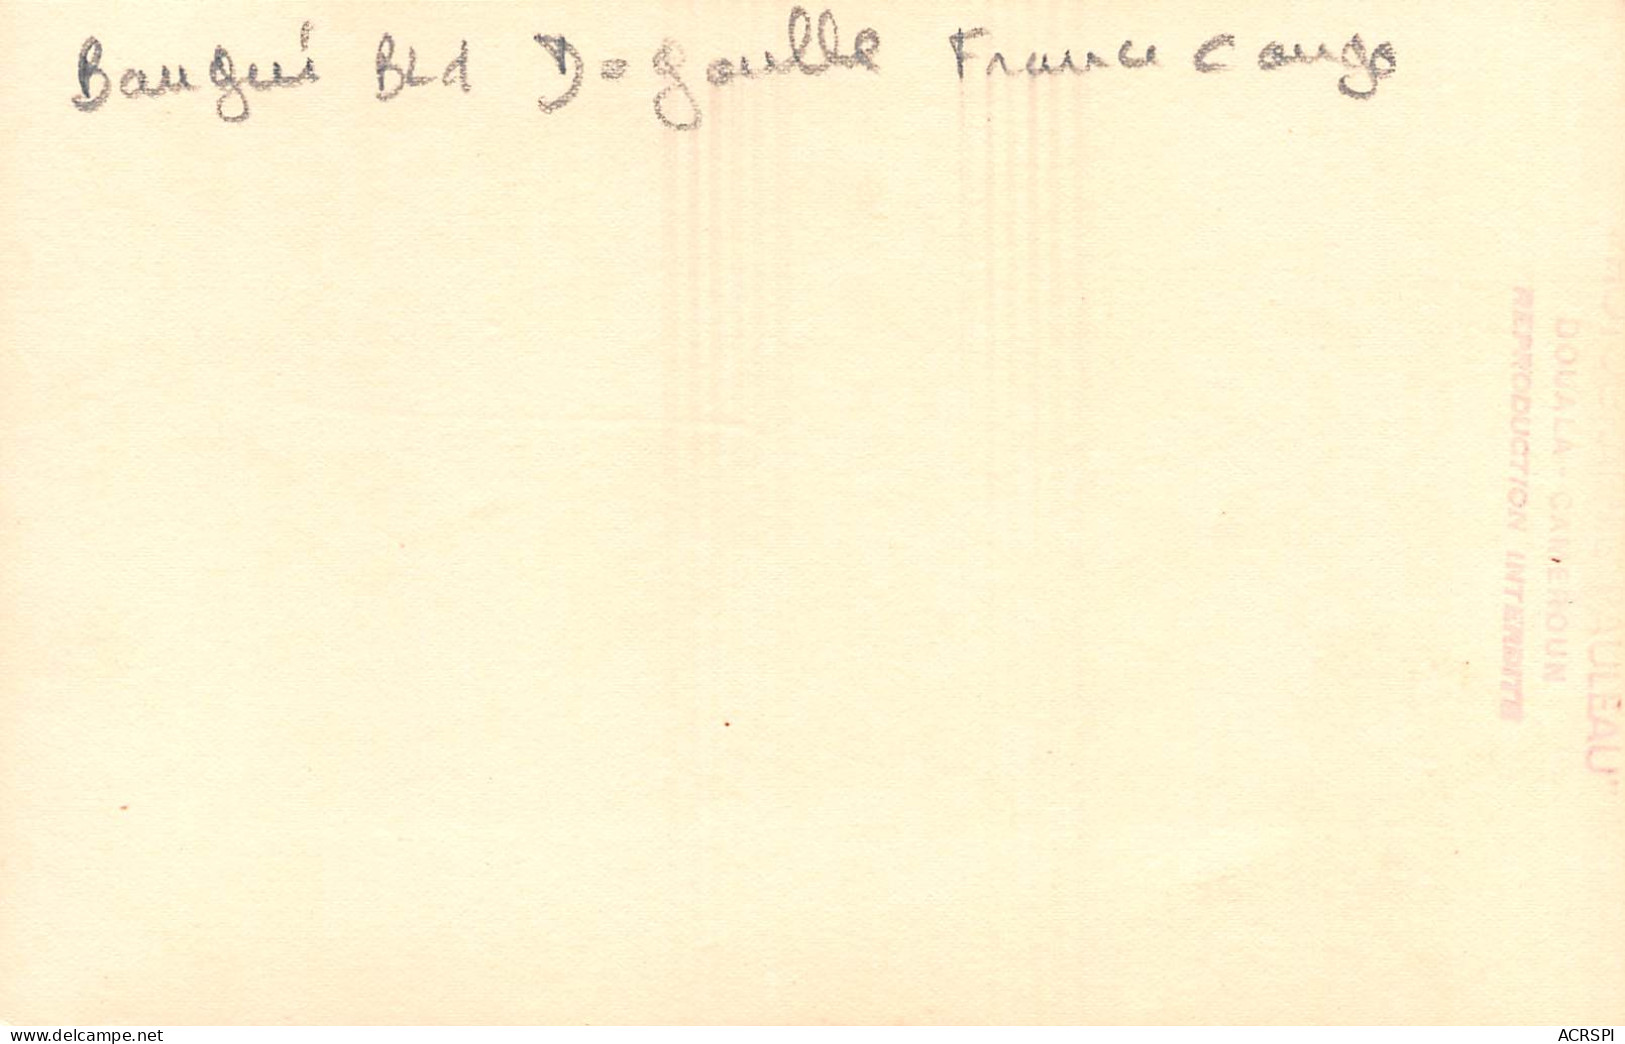 BANGUI République Centrafricaine France Congo Bld De Gaulle Photo PAULEA Non Circulé (Scan R/V) N° 53 \MP7121 - Repubblica Centroafricana